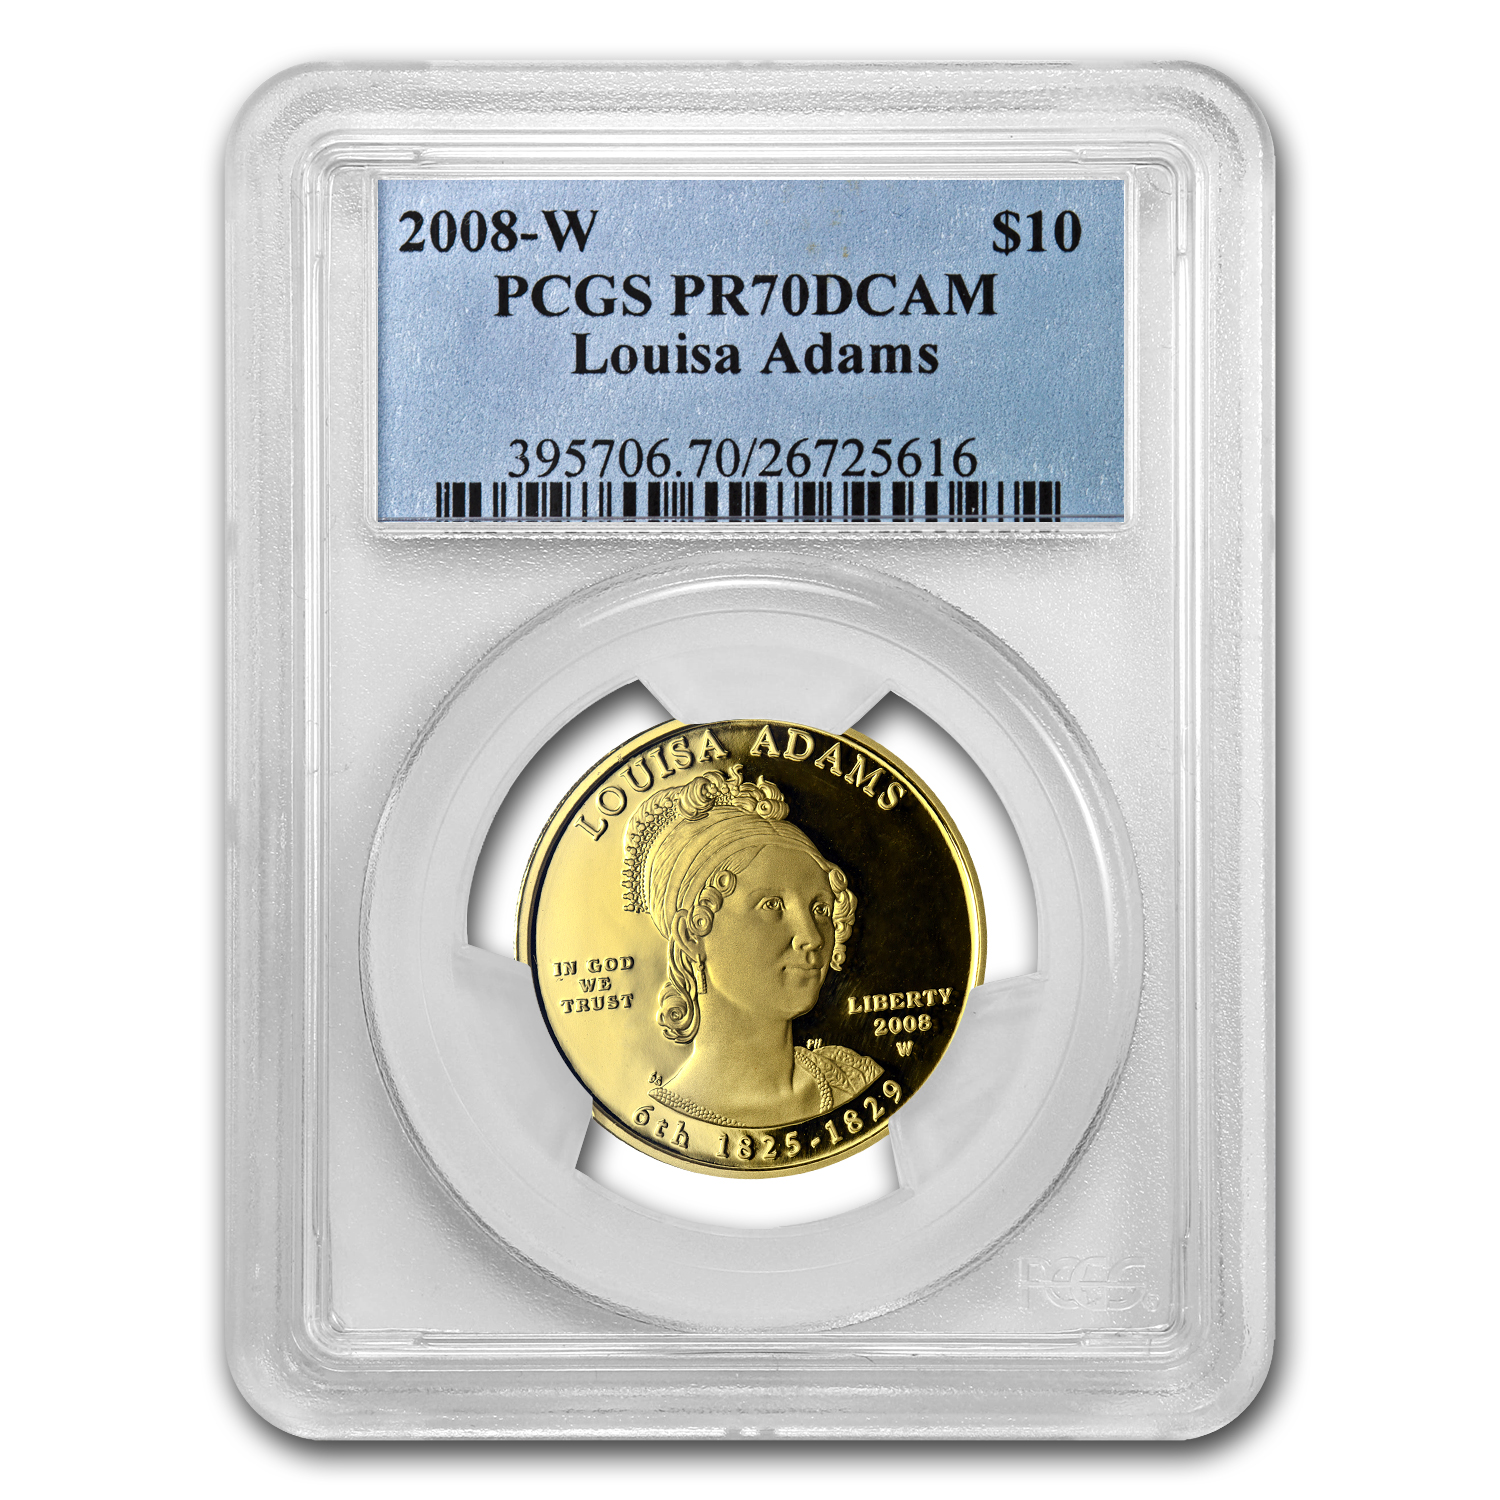 Buy 2008-W 1/2 oz Proof Gold Louisa Adams PR-70 PCGS